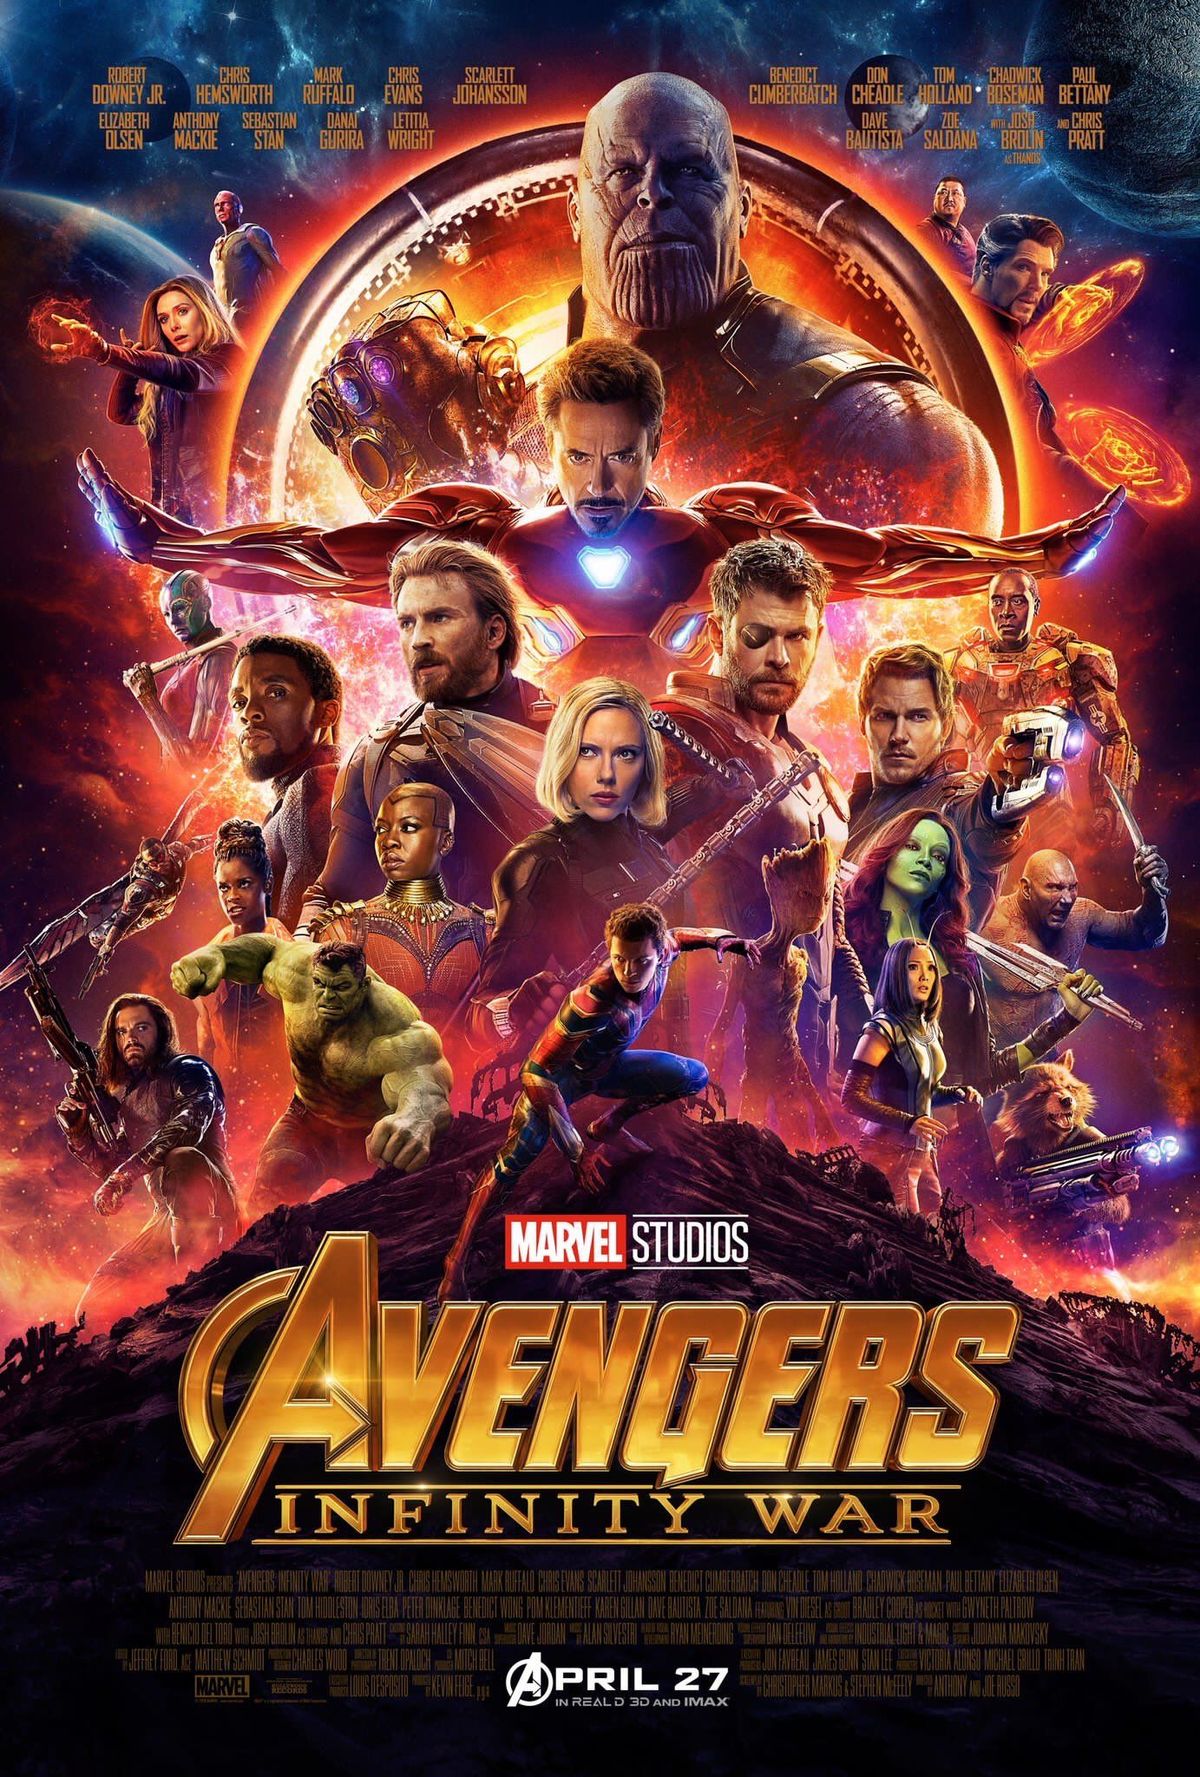 Marvel montuje fantastyczny plakat Avengers: Infinity War Motion